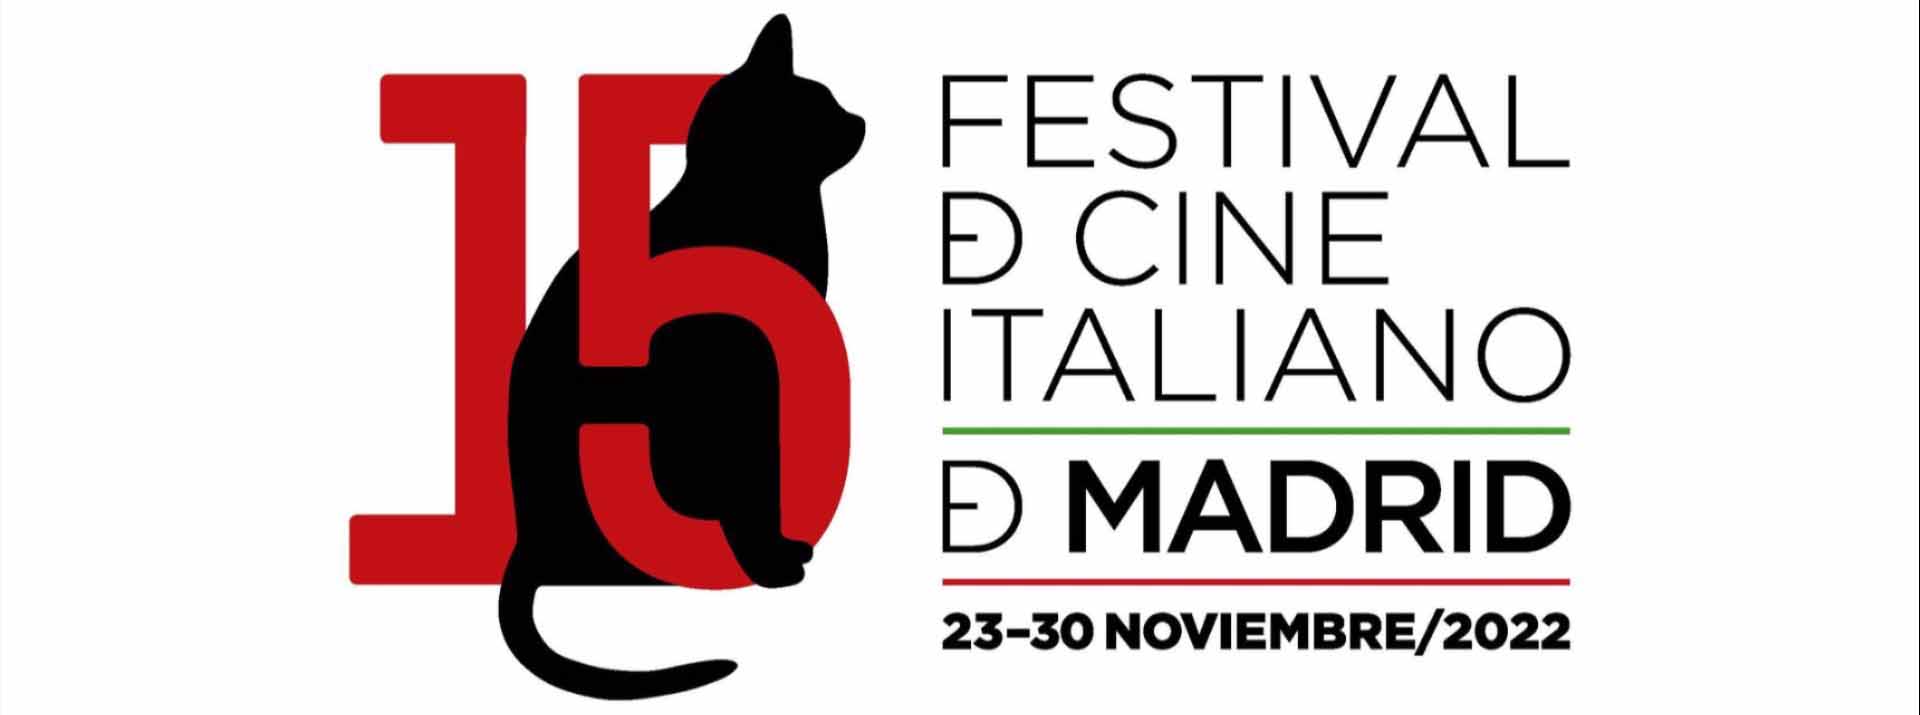 festival de cine italiano de madrid